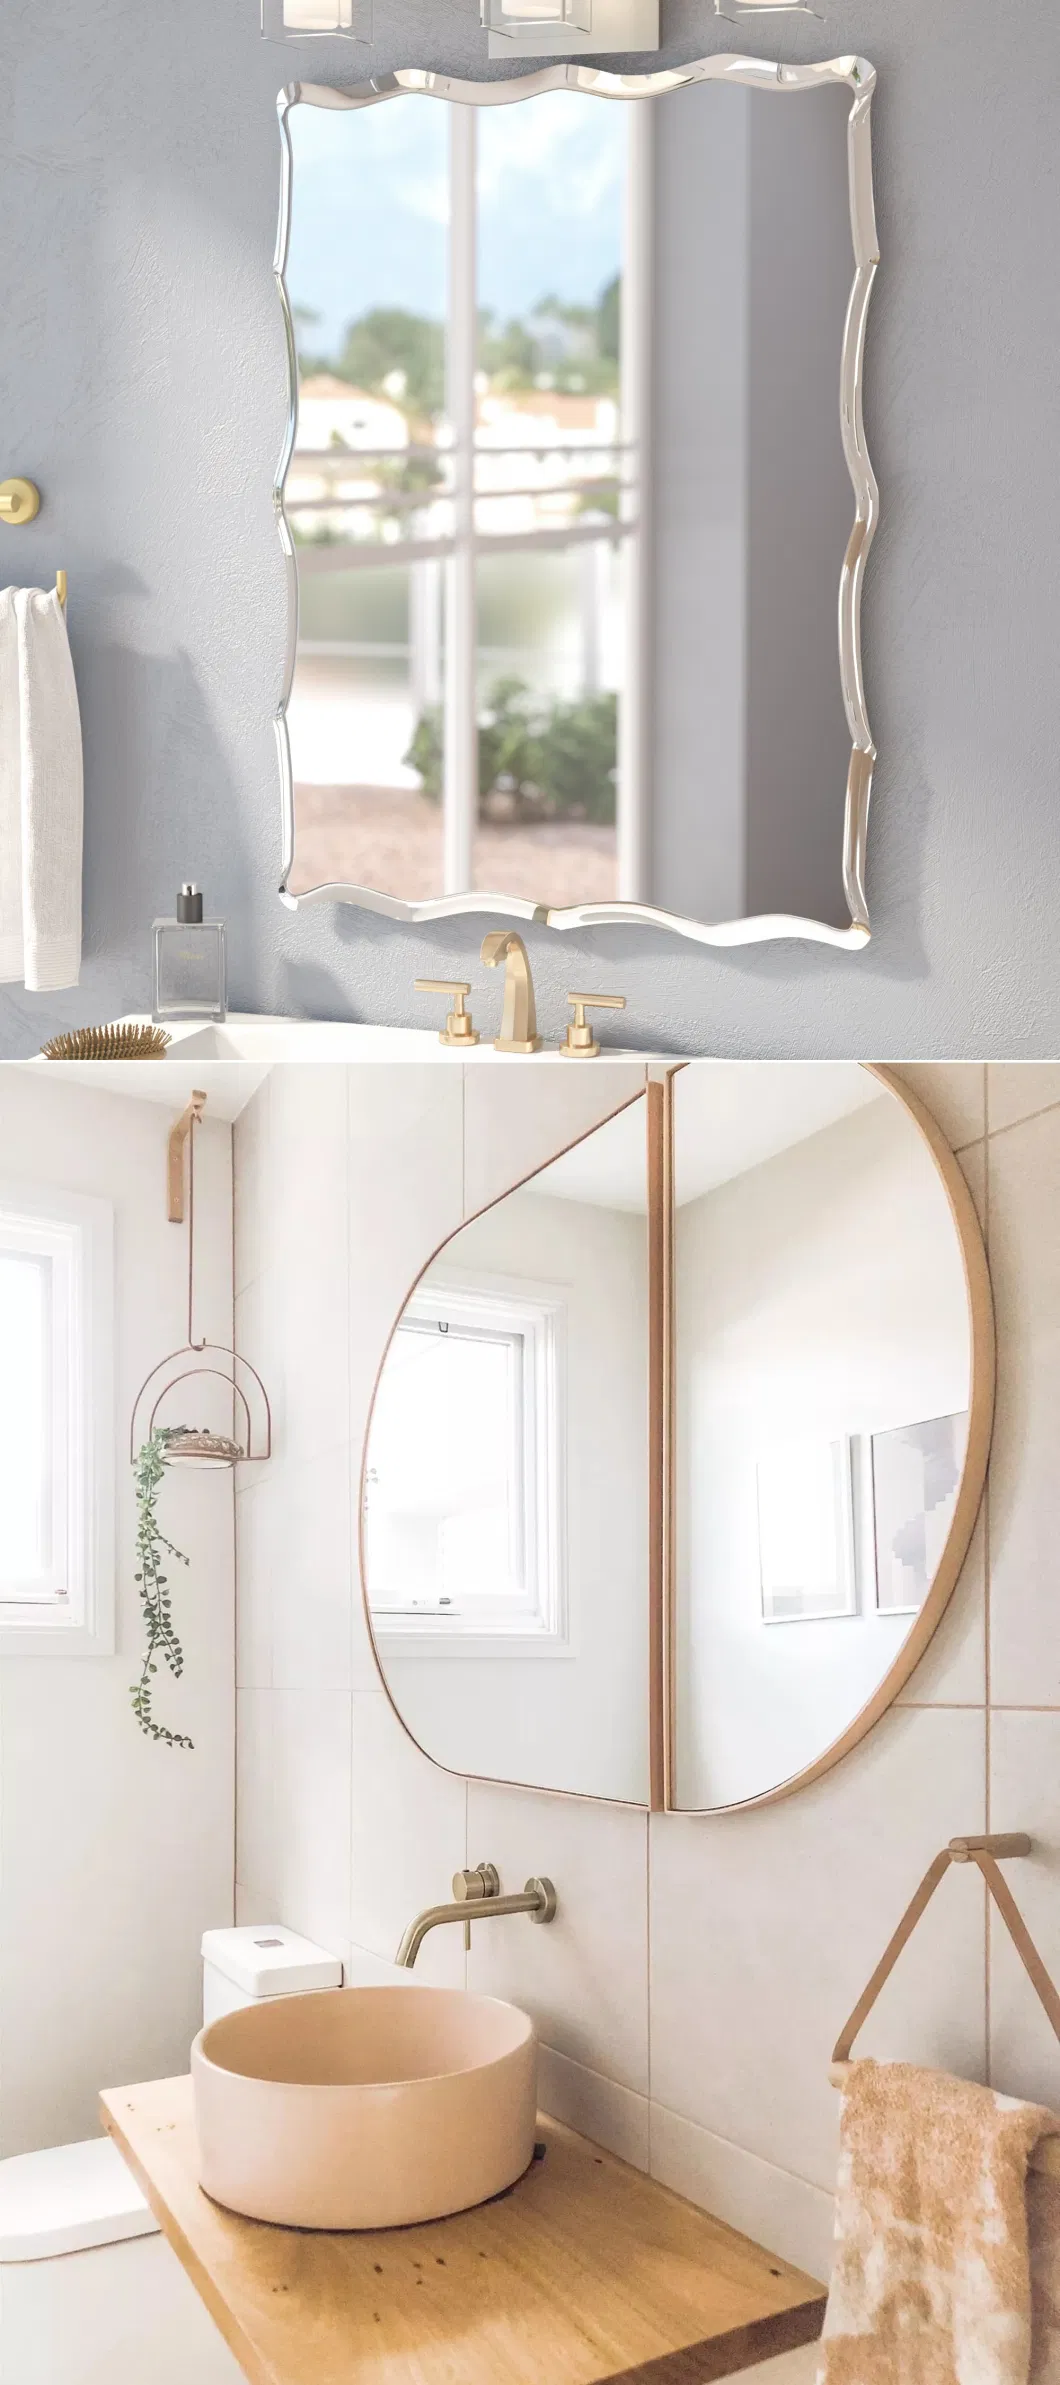 ORTONBATH Arch Shape Golden Framed Home Smart Wall Mounted Nonled Mirror Bathroom Designer Art Makeup Mirror